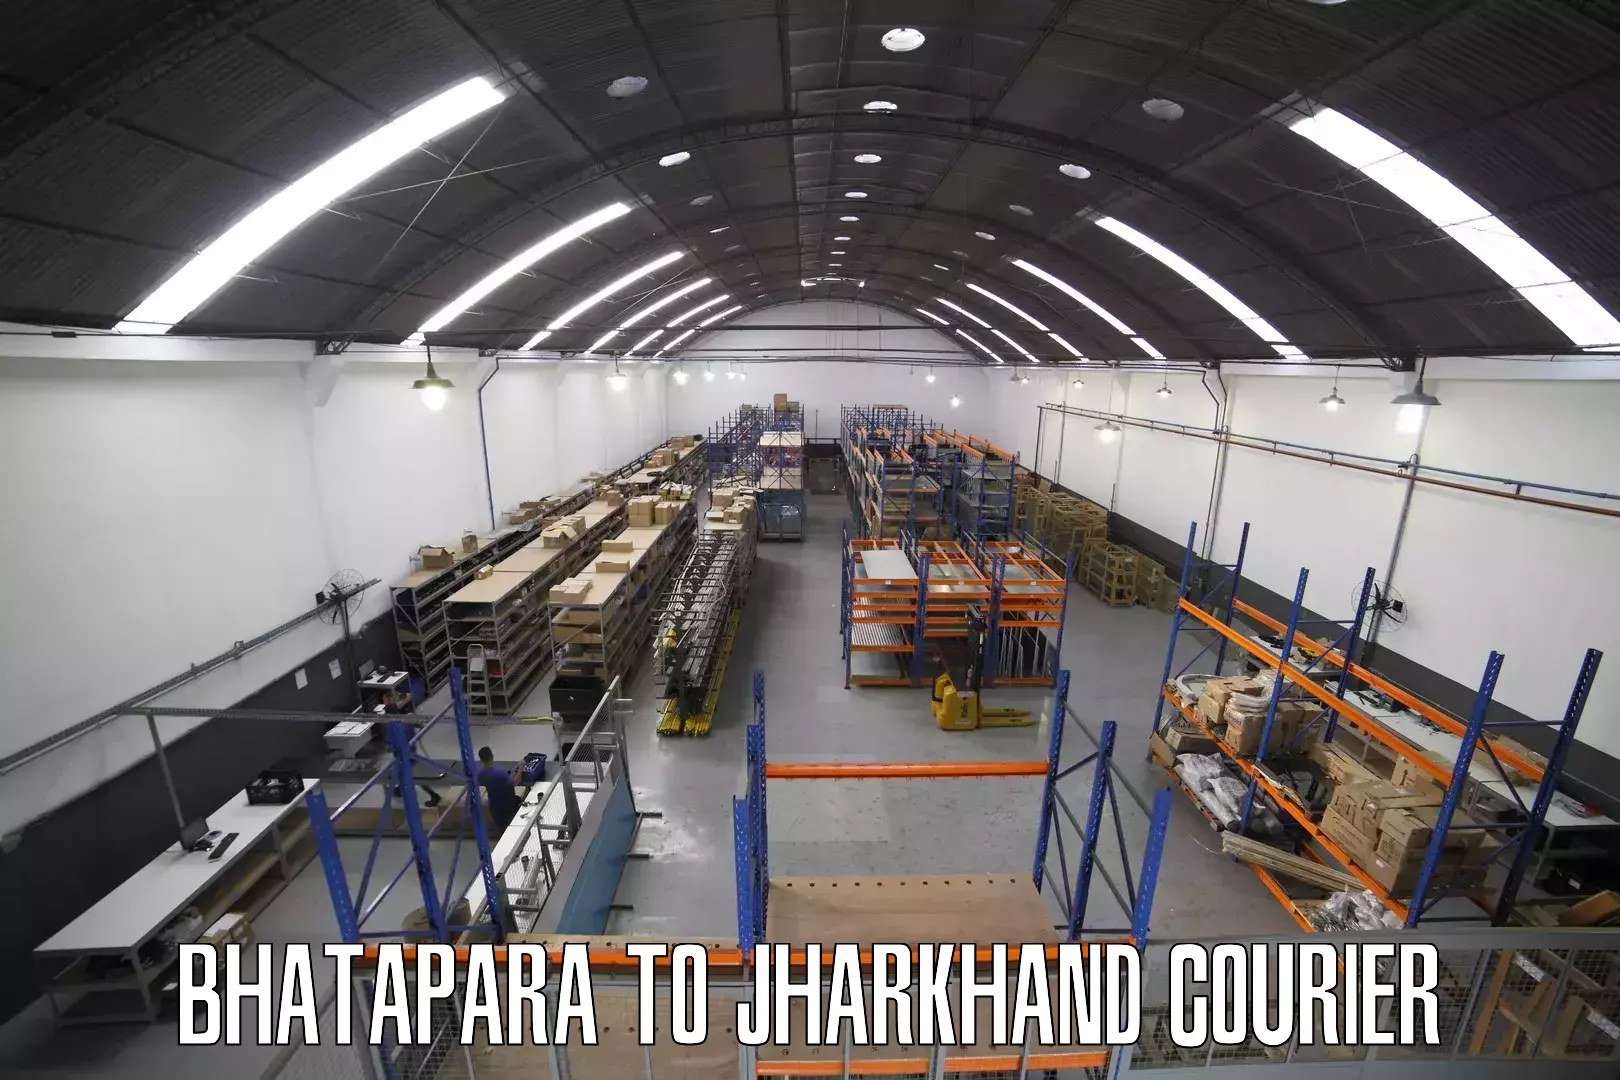 Subscription-based courier Bhatapara to Doranda